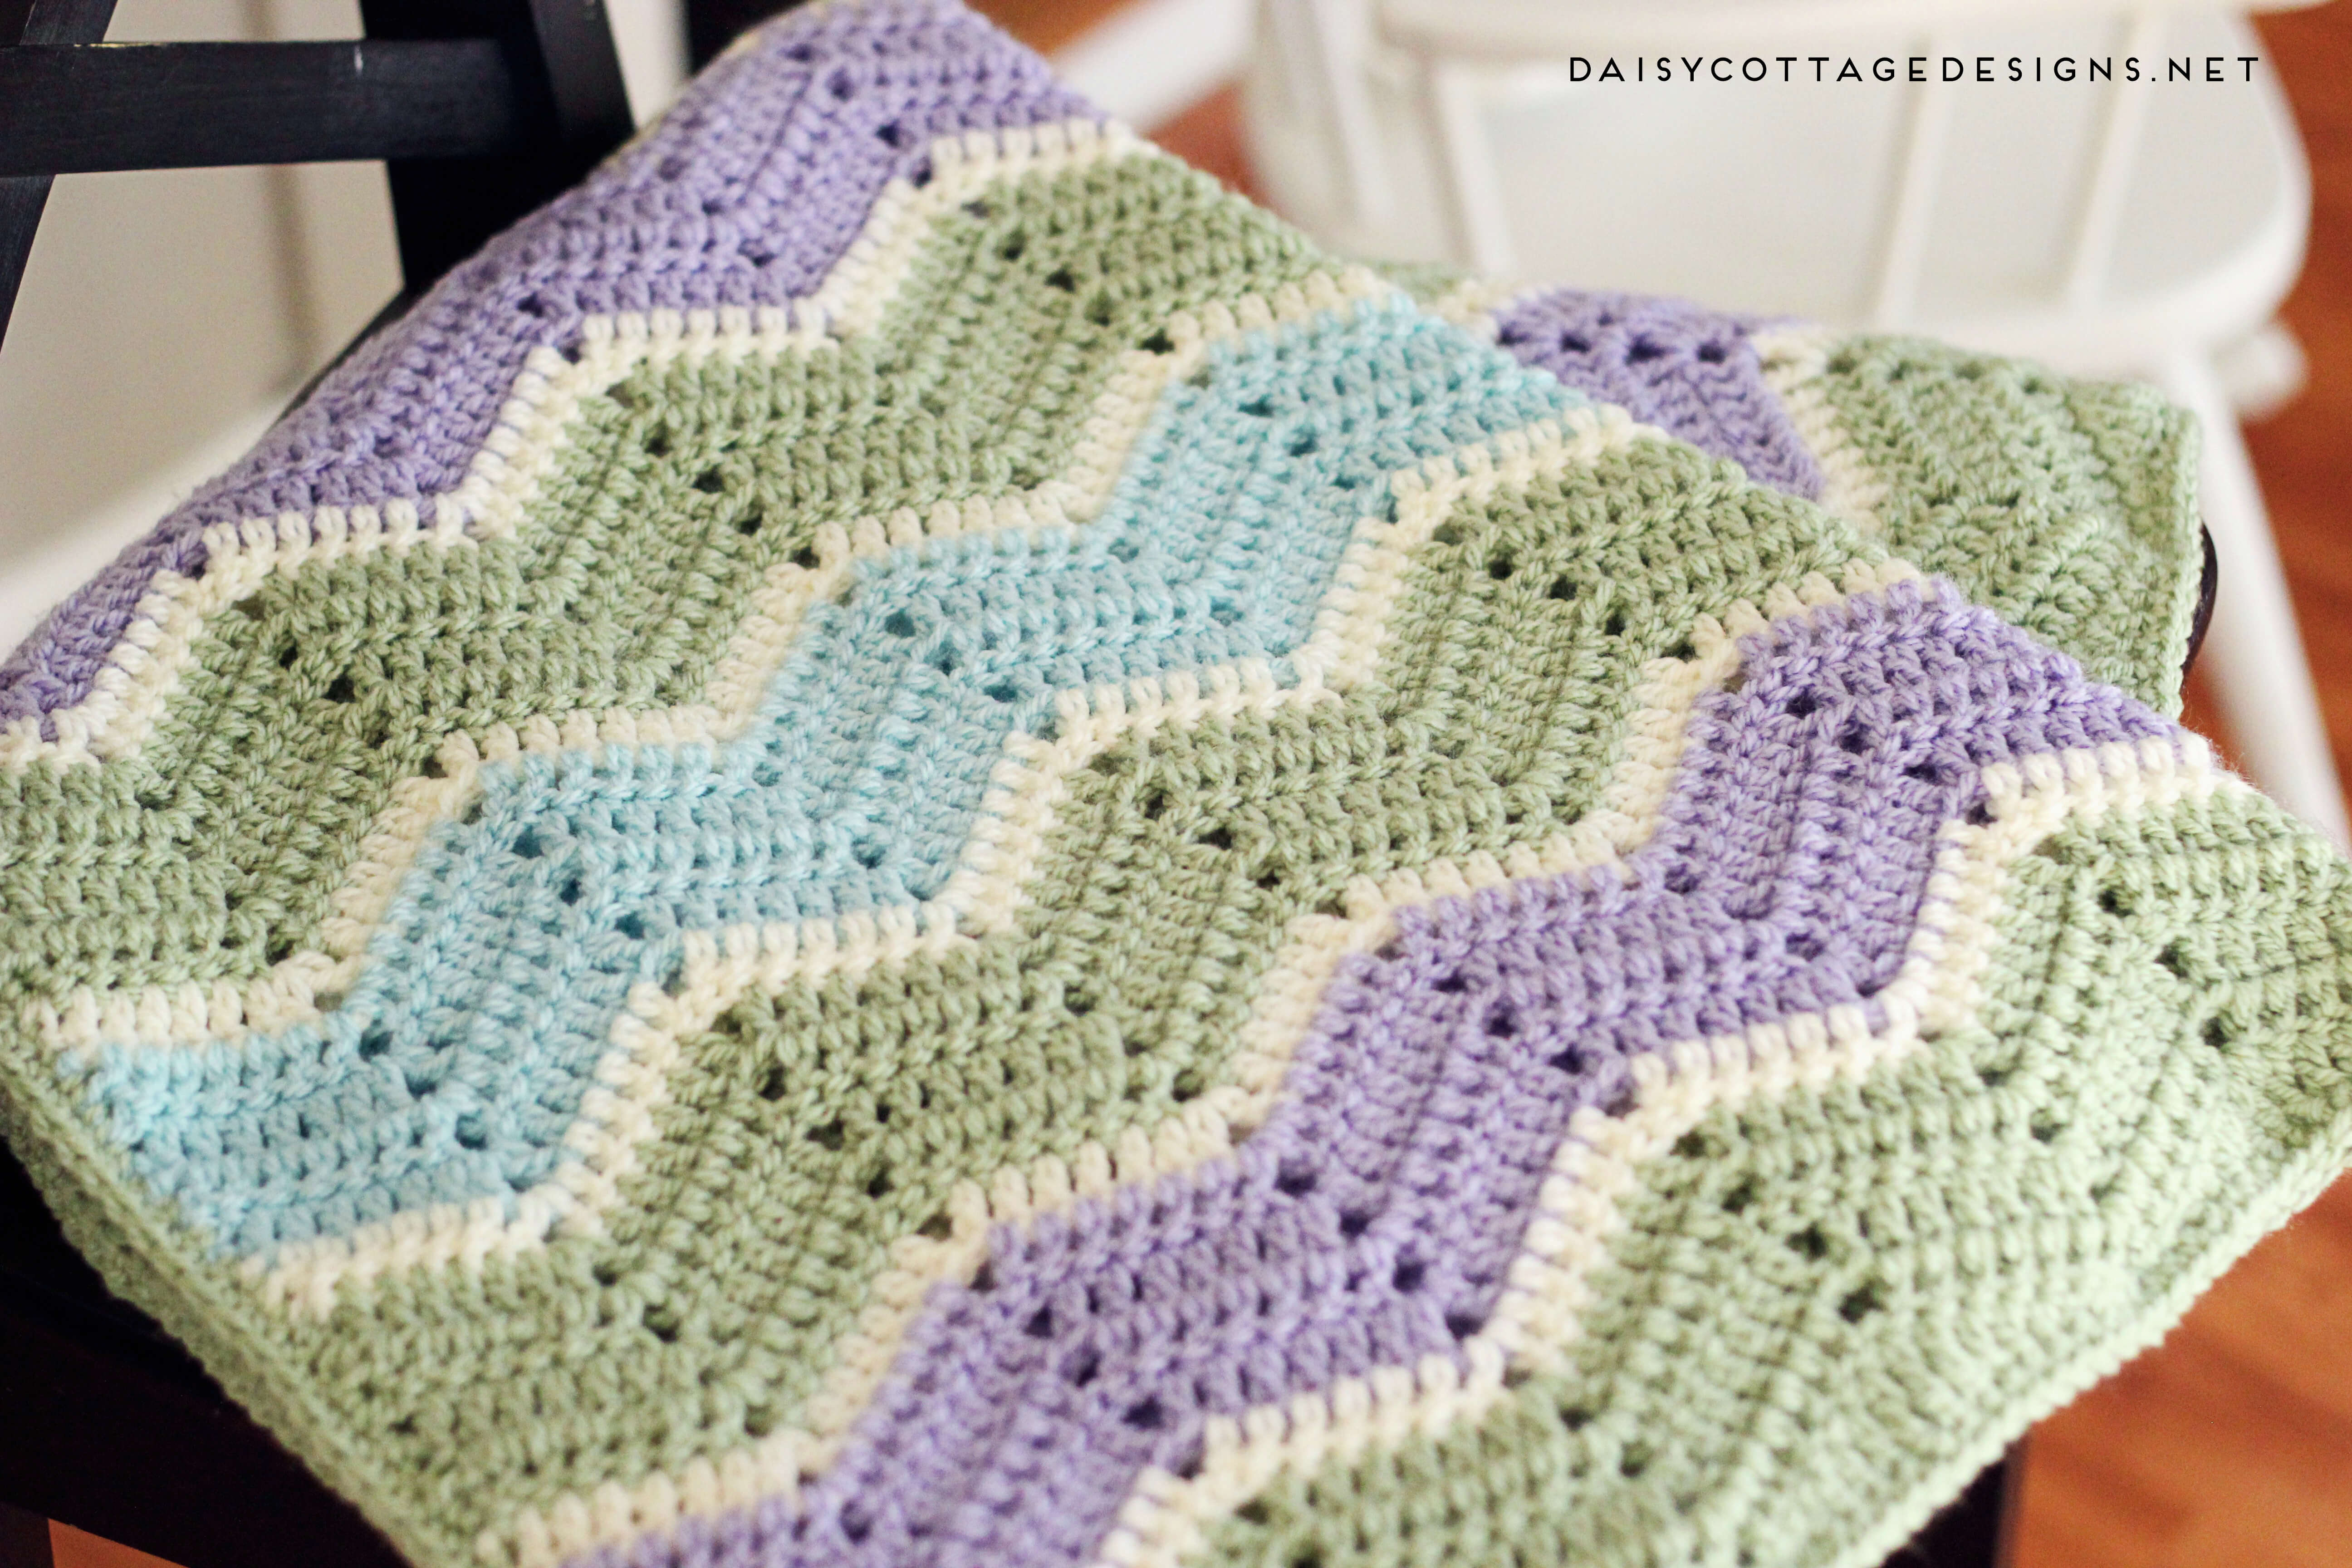 Simple Crochet Blanket Patterns Ripple Blanket Crochet Pattern Daisy Cottage Designs